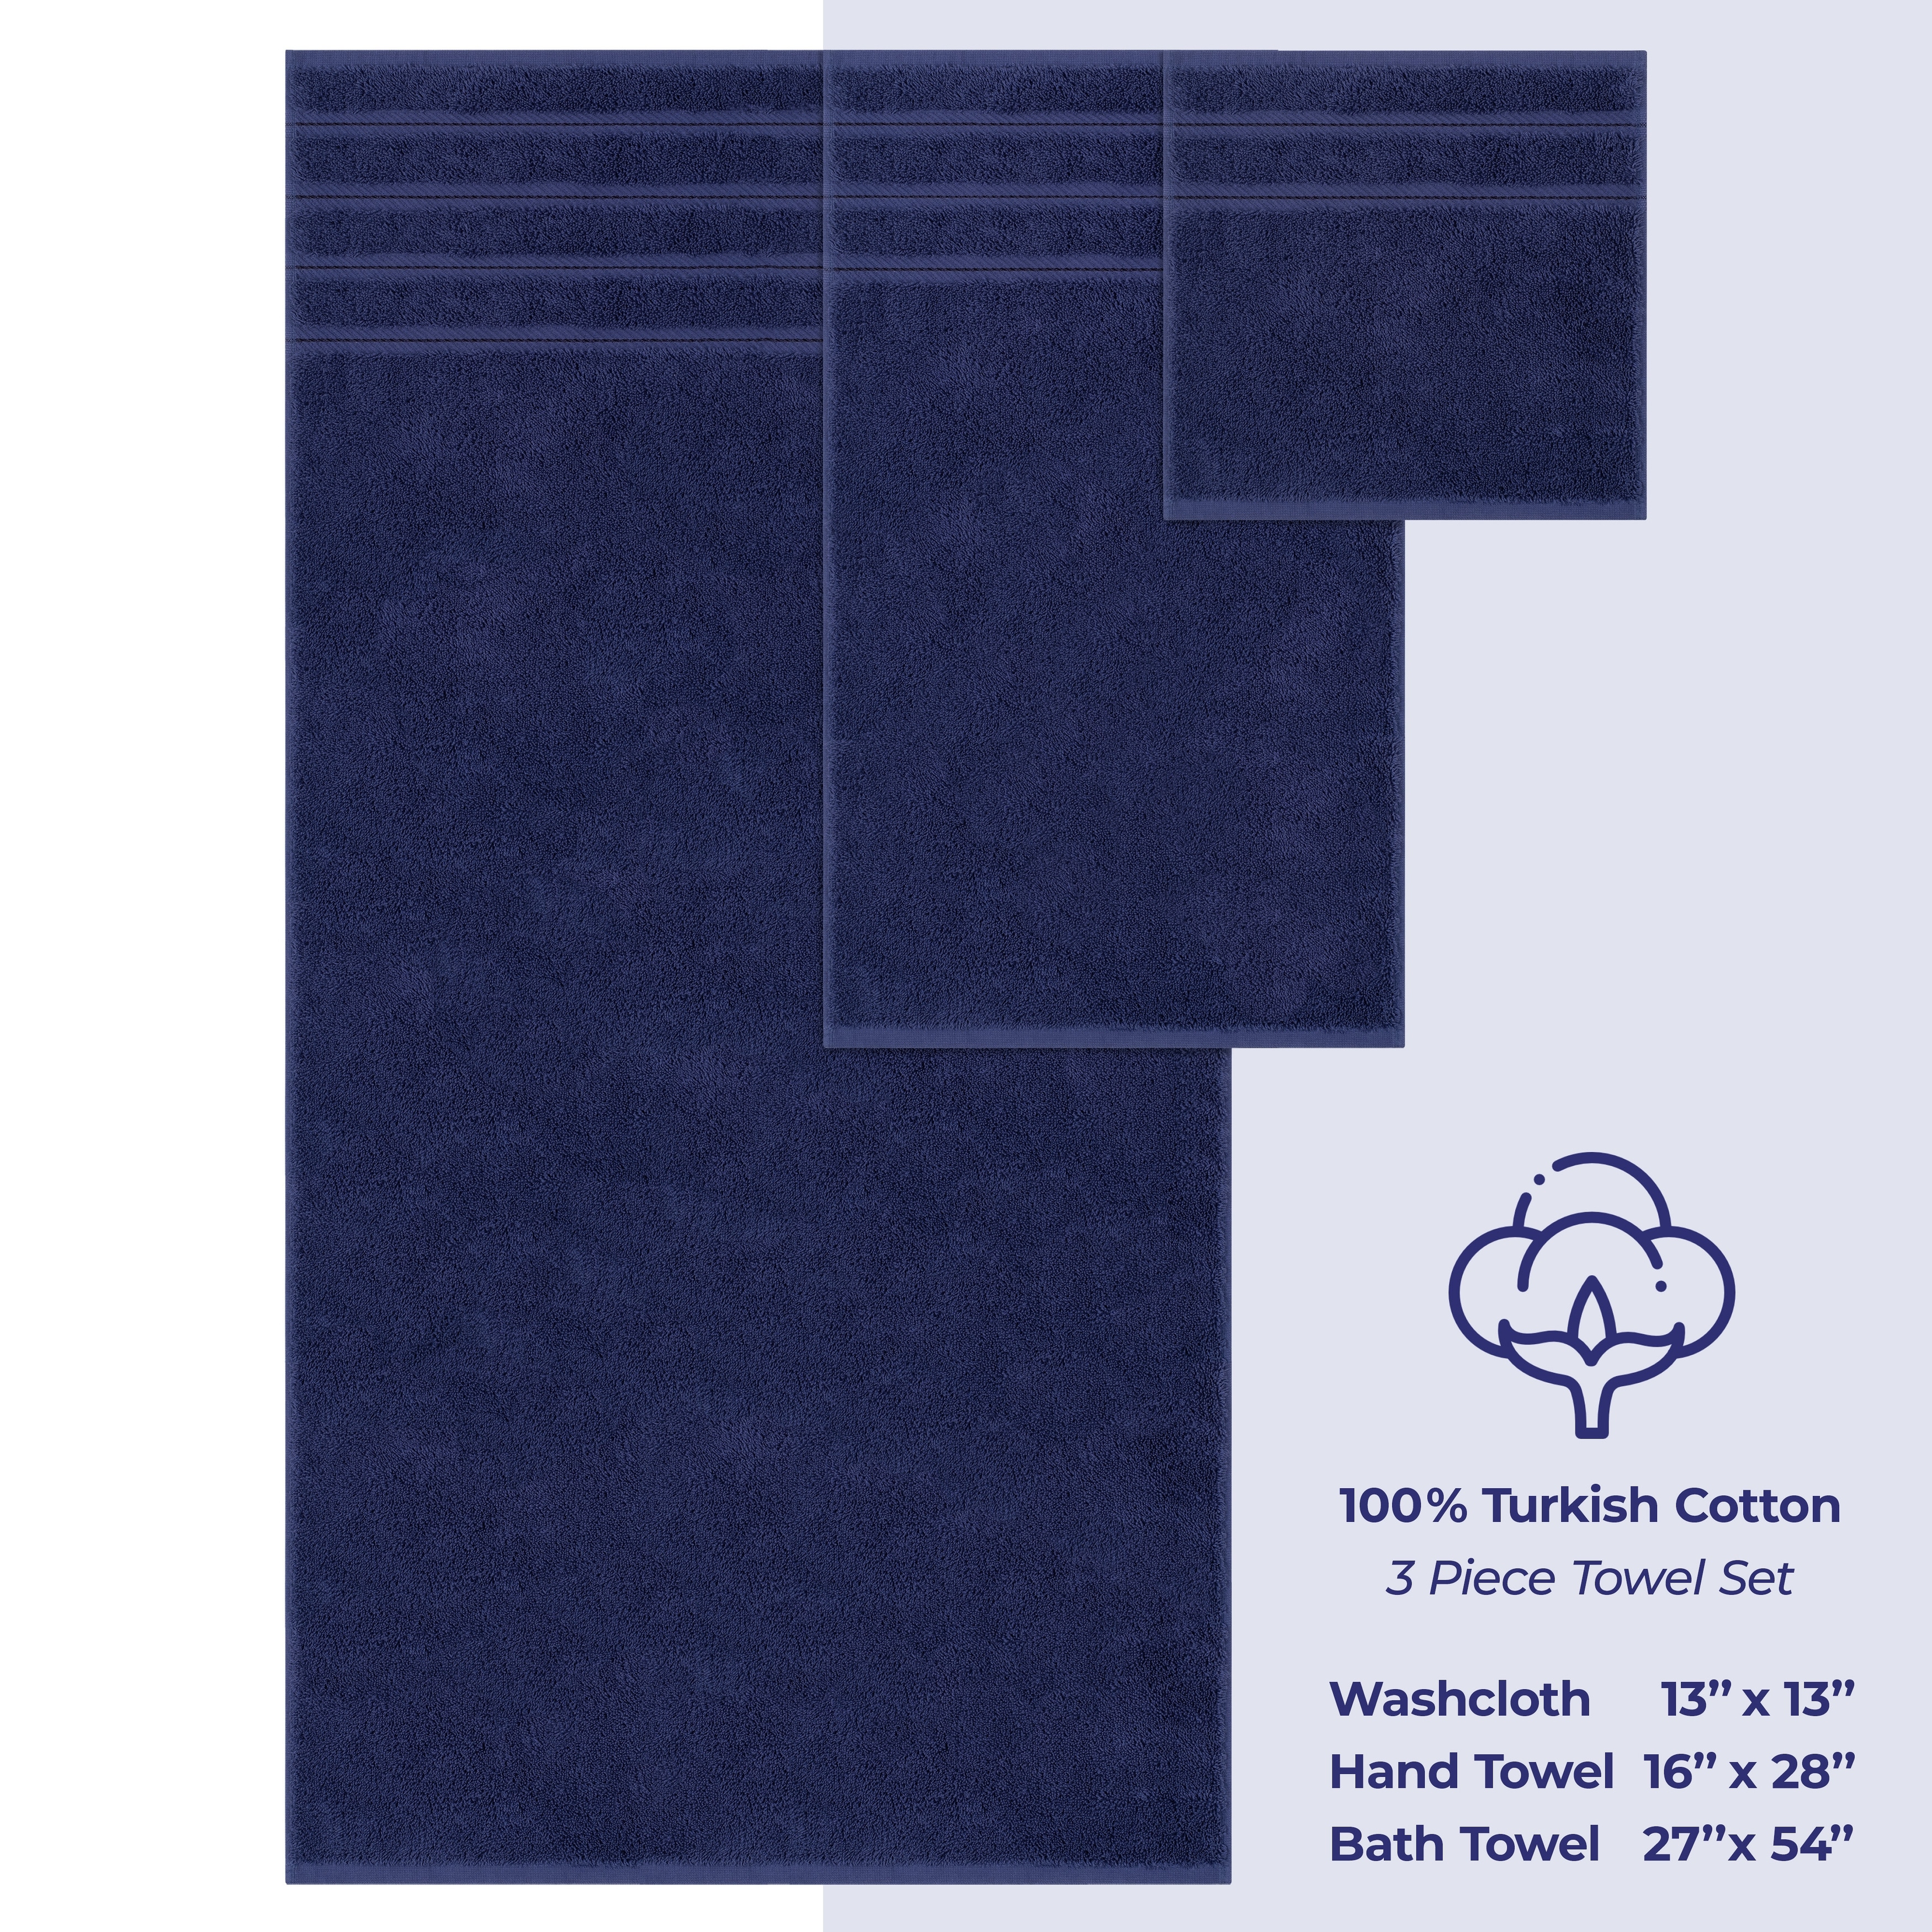 https://ak1.ostkcdn.com/images/products/is/images/direct/11610579f6d90eec169816df9411fec43ae6f80d/American-Soft-Linen-3-Piece%2C-100%25-Genuine-Turkish-Cotton-Premium-%26-Luxury-Towels-Bathroom-Sets.jpg